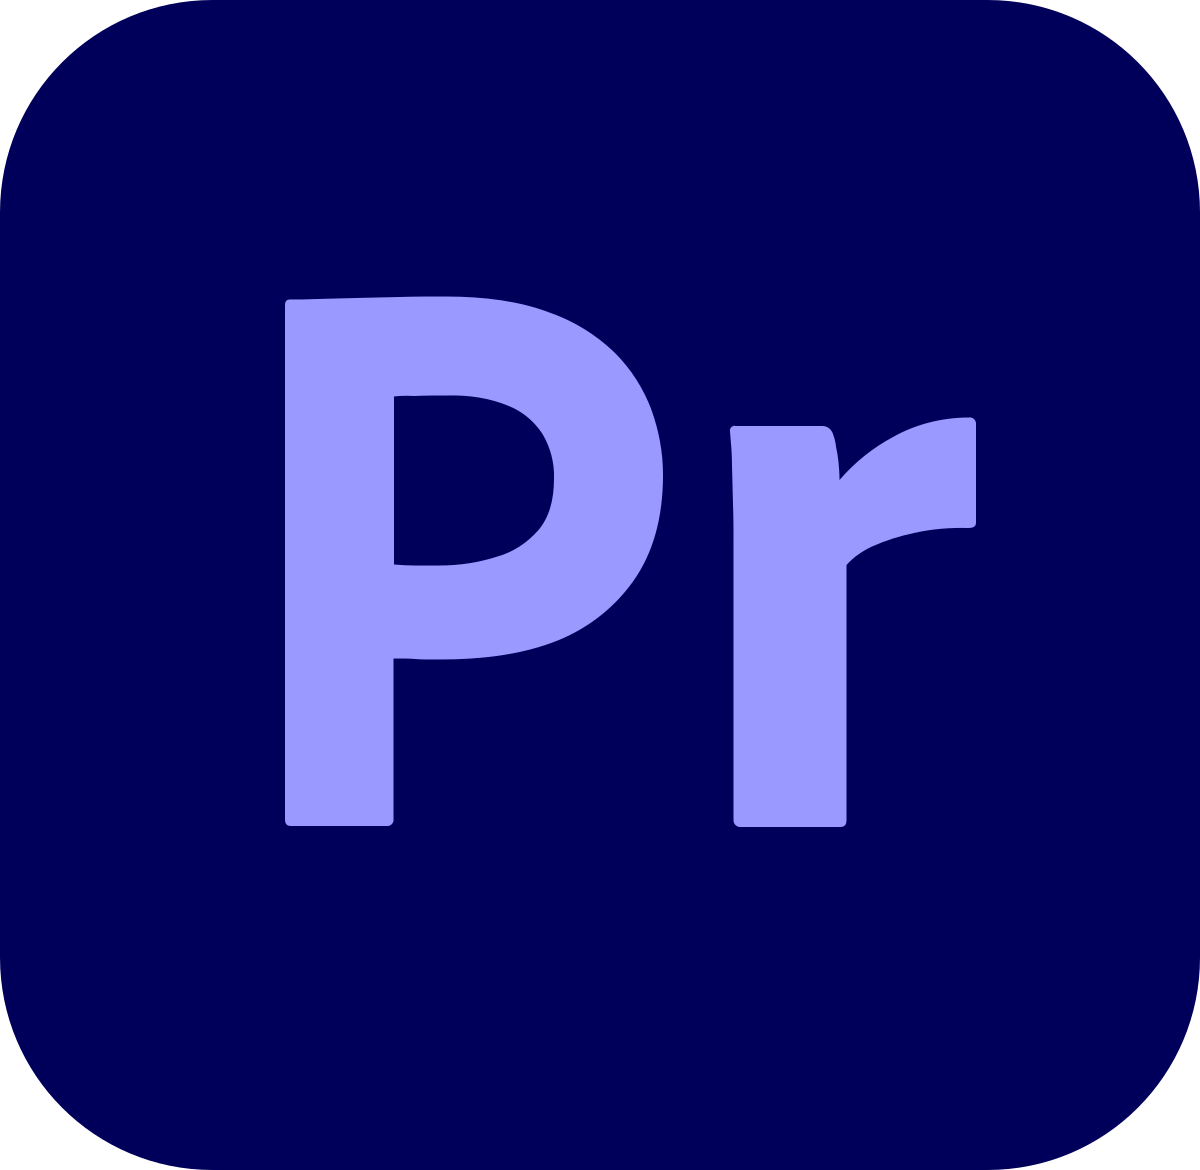 Adobe Premiere Pro CC 2022 Crack With License Key Free Download